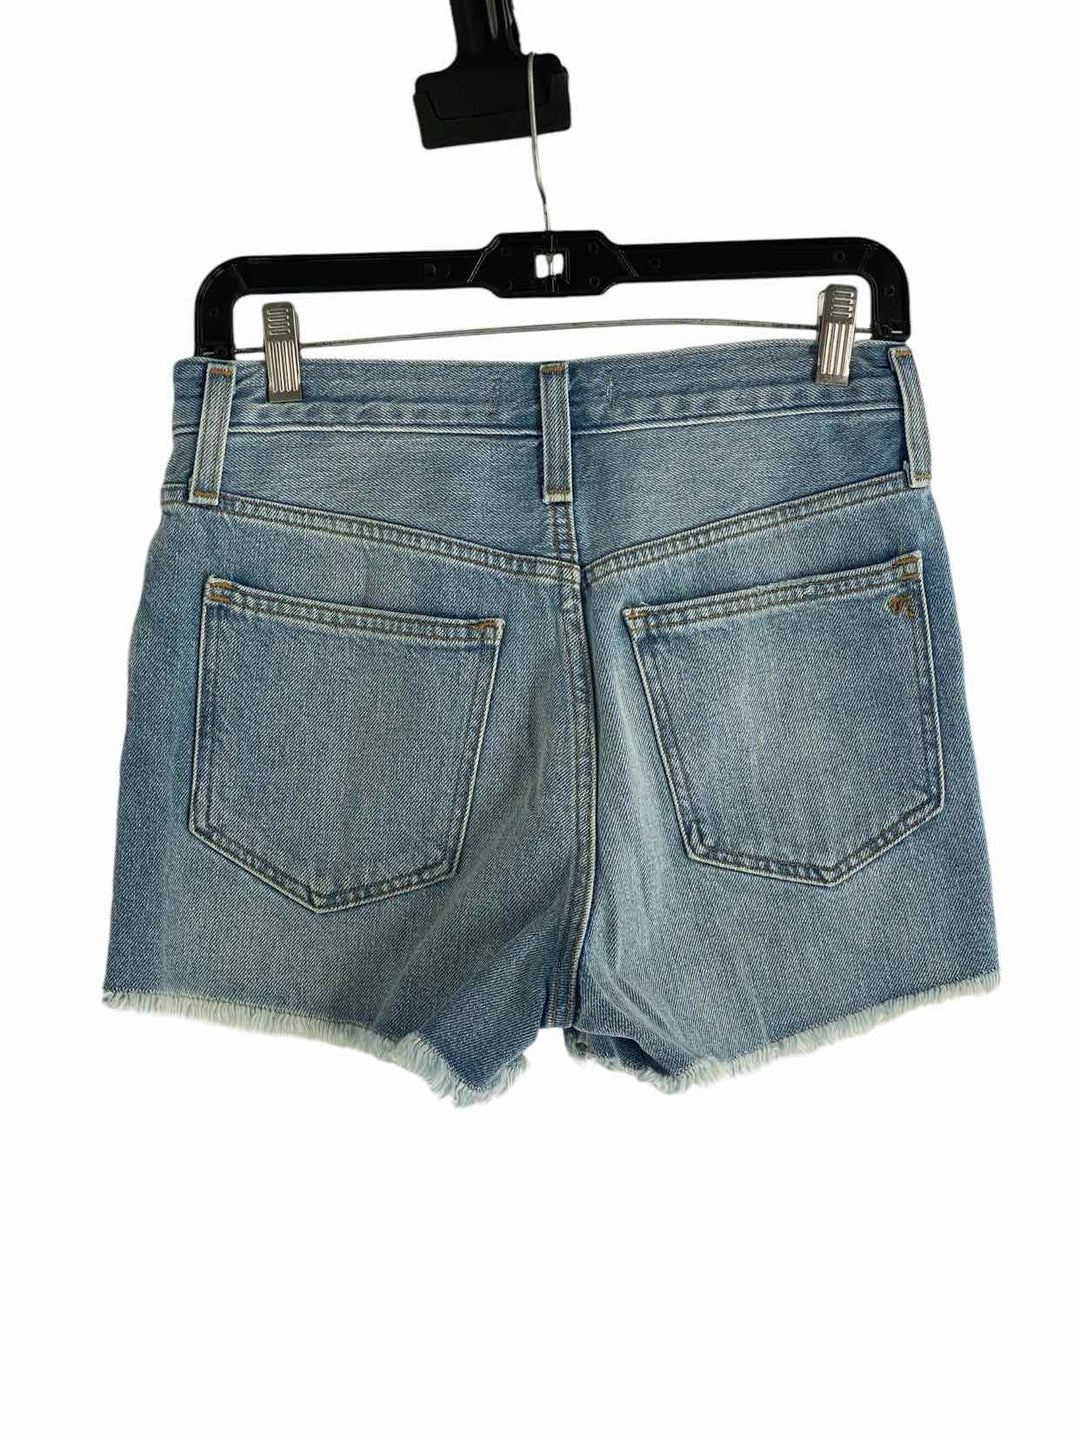 MadeWell Size 25 Denim Shorts